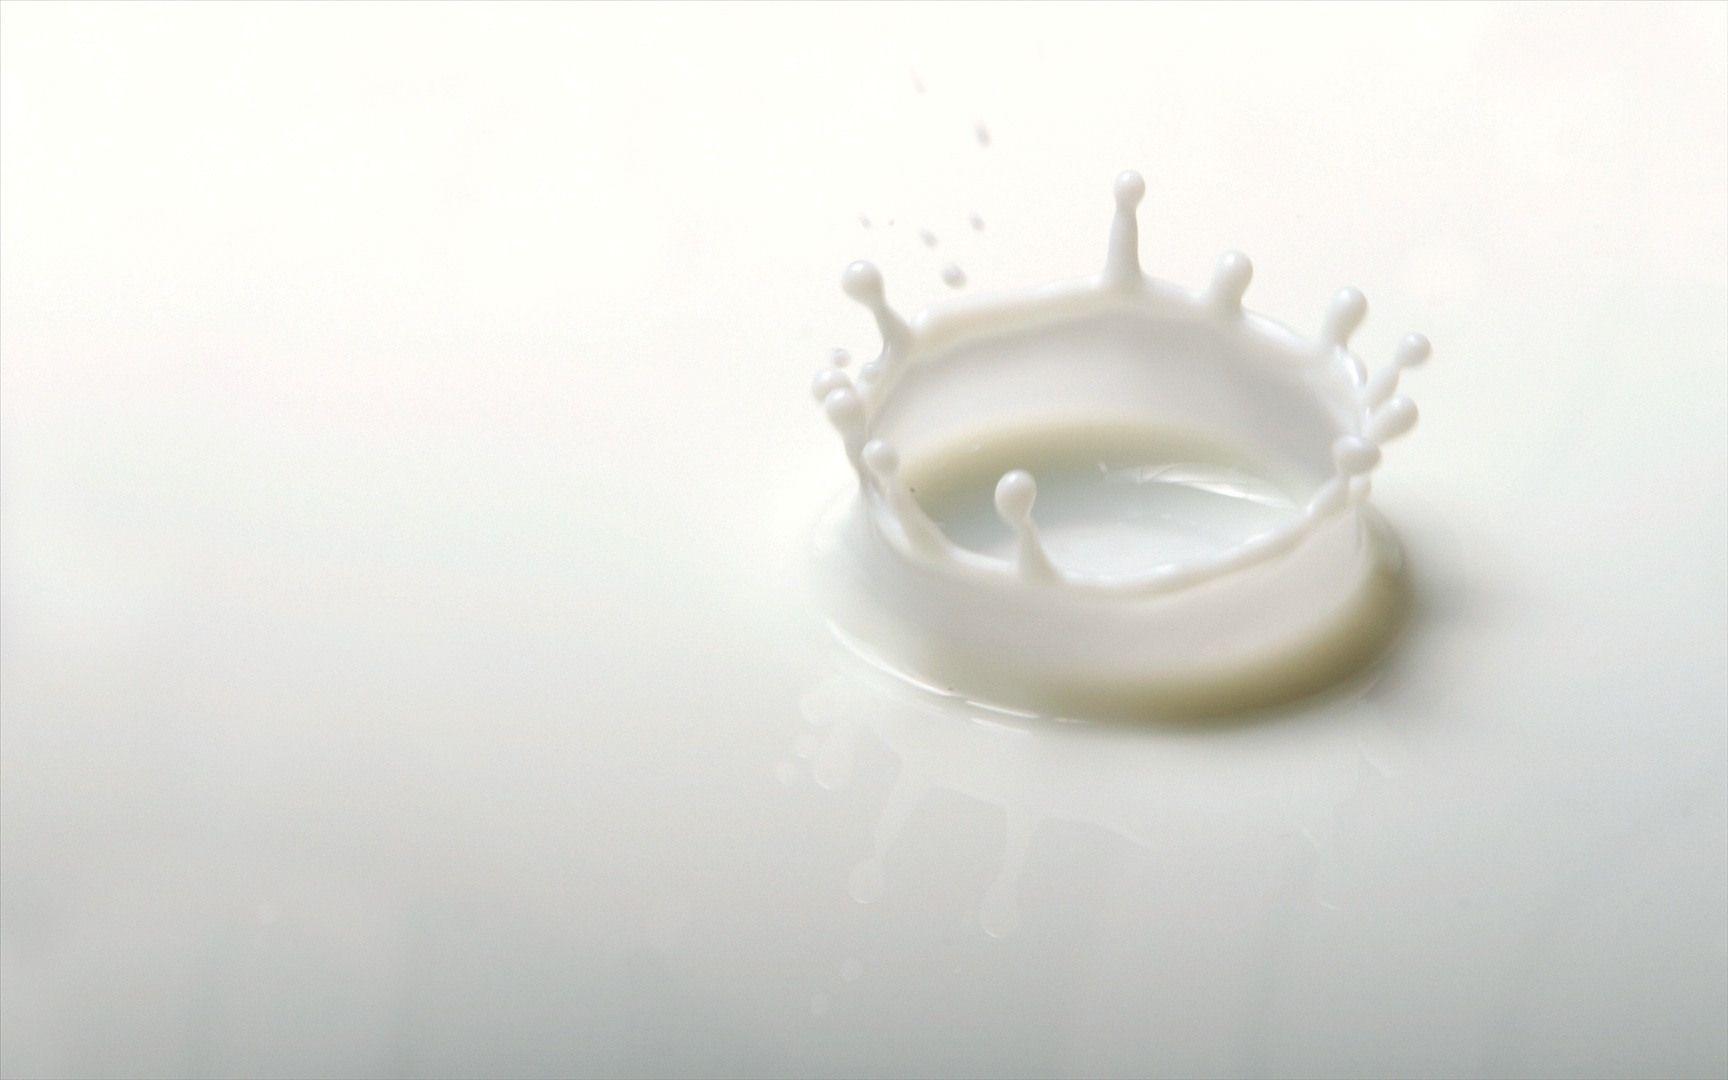 Milk Wallpaper, HD Milk Wallpaper and Photo. View 100